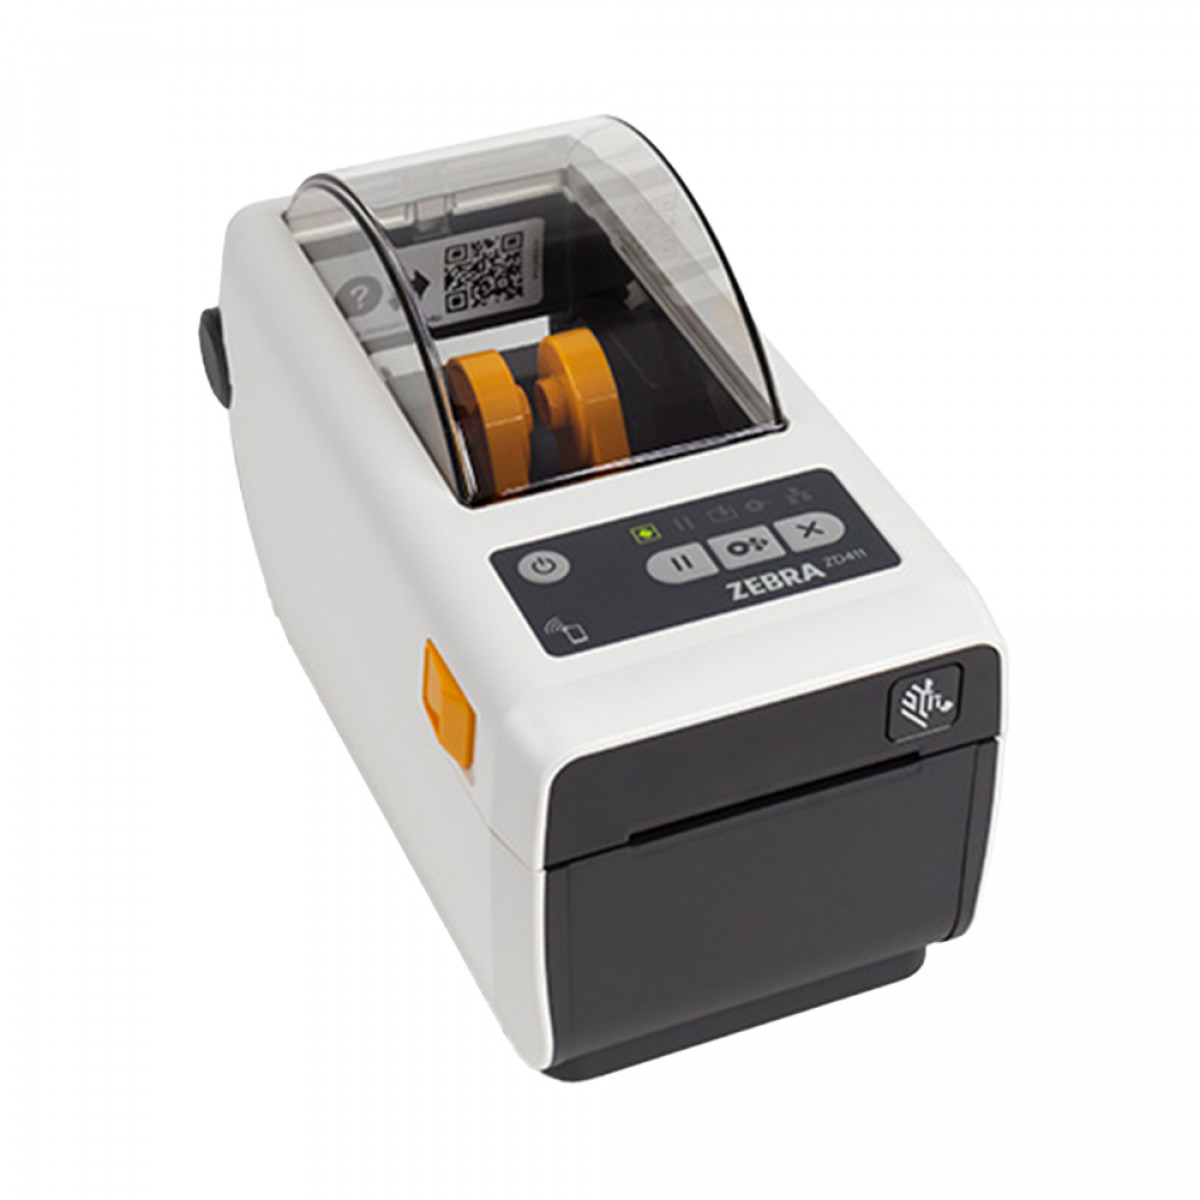 Zebra ZD411d-HC | 2inch printer for Healthcare Wristbands